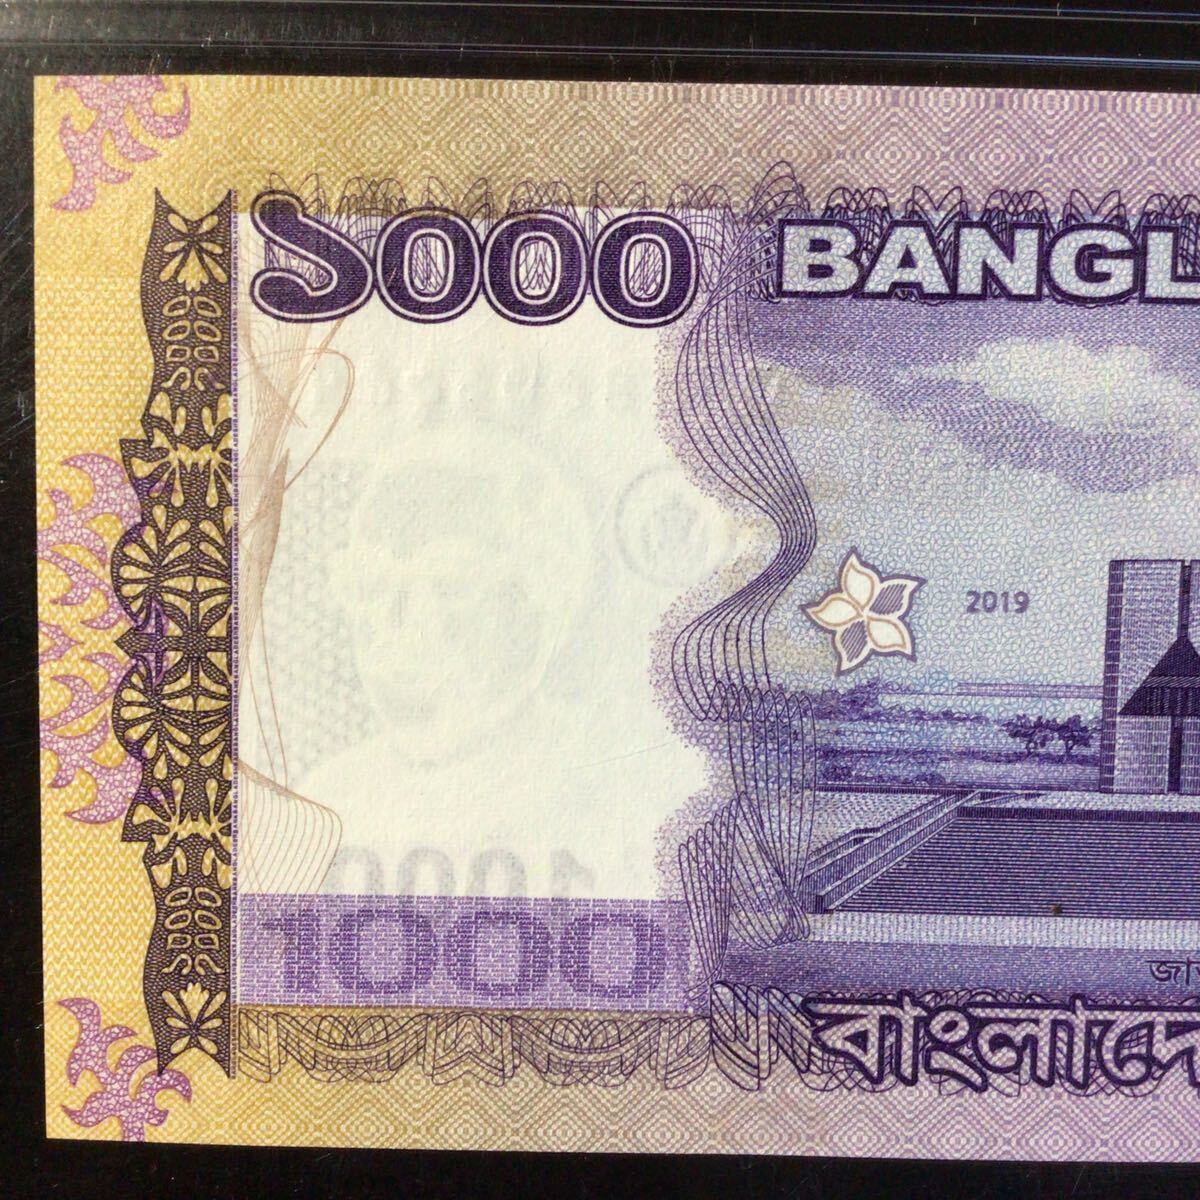 World Banknote Grading BANGLADESH《Bangladesh Bank》1000 Taka【2019】『PMG Grading Gem Uncirculated 66 EPQ』_画像6